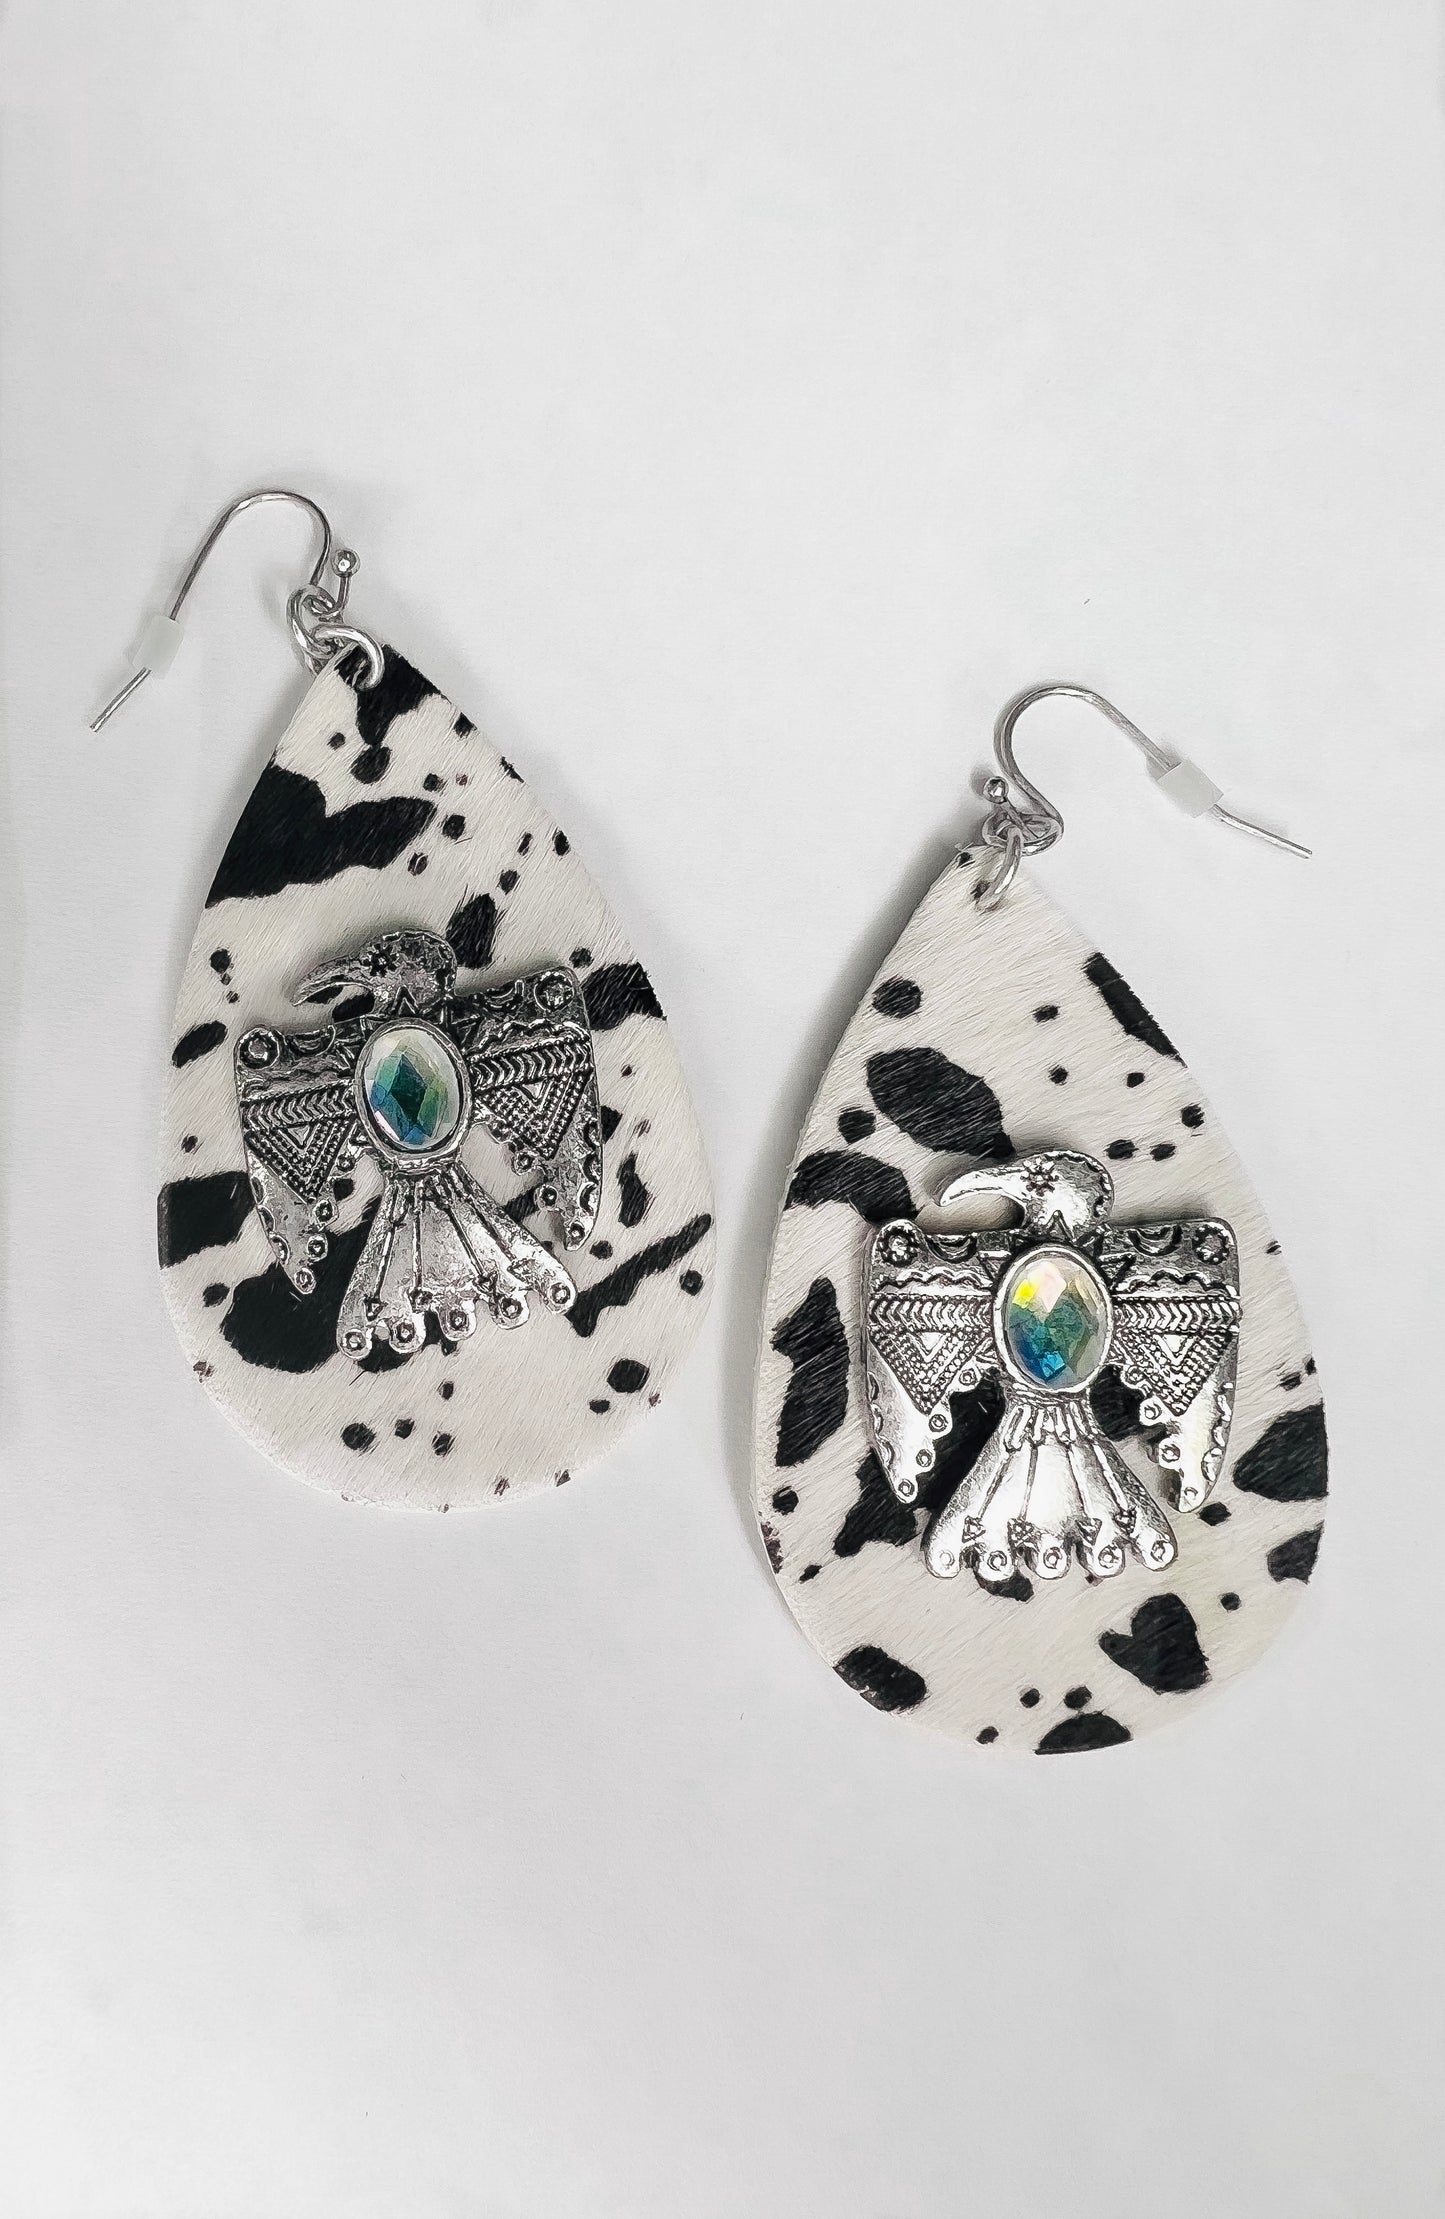 AB Oval Crystal Silver Thunderbird Cowprint Teardrop Earrings-Earrings-806 Accessories-806-E229SIVBL-The Twisted Chandelier